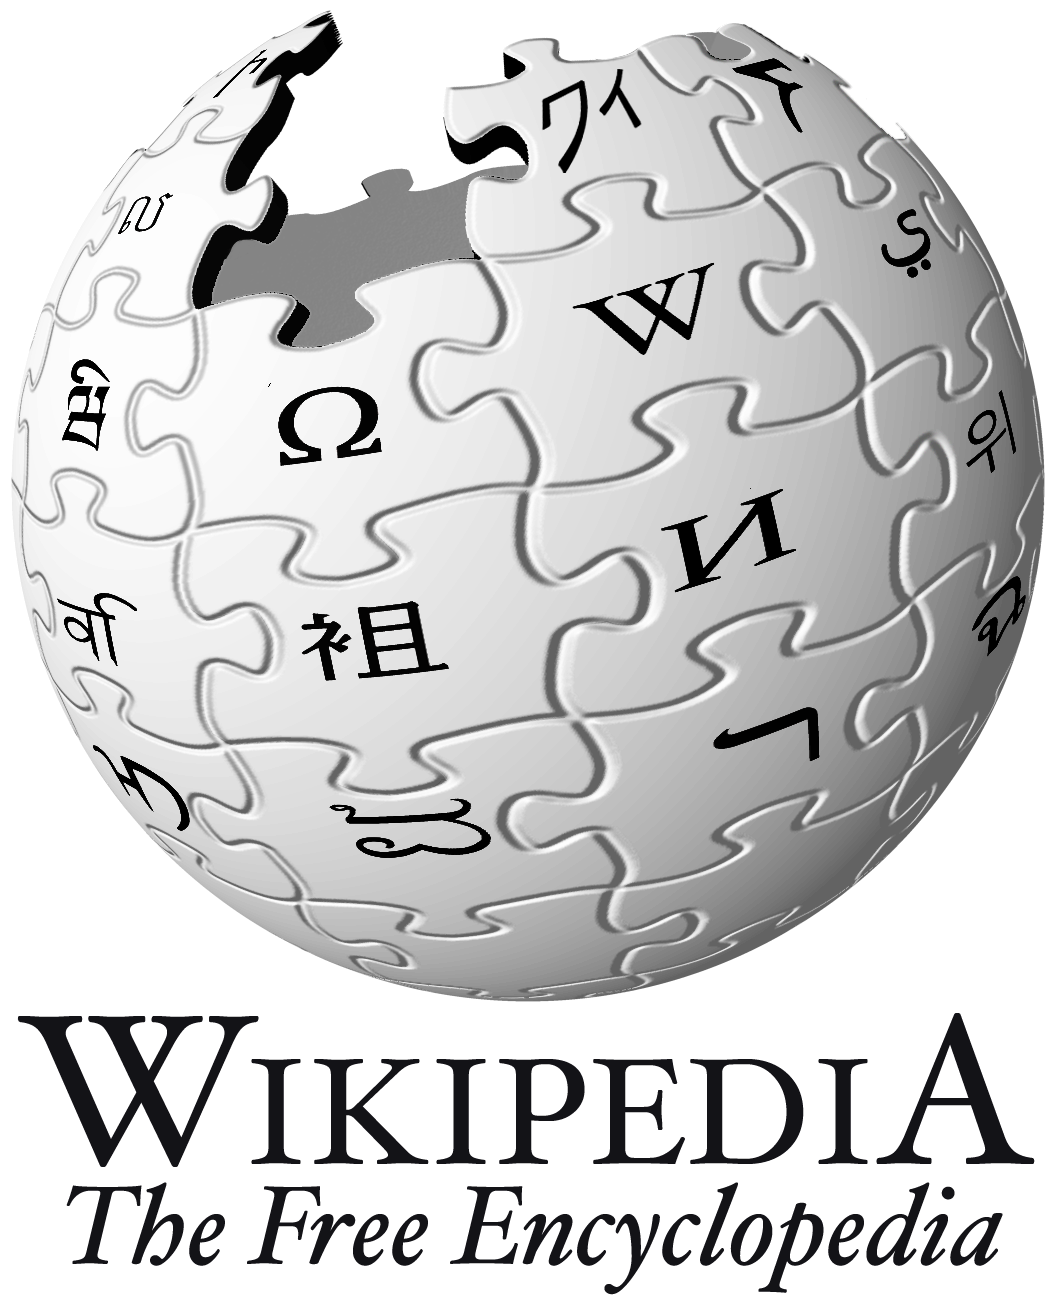 IS-3 - Wikipedia